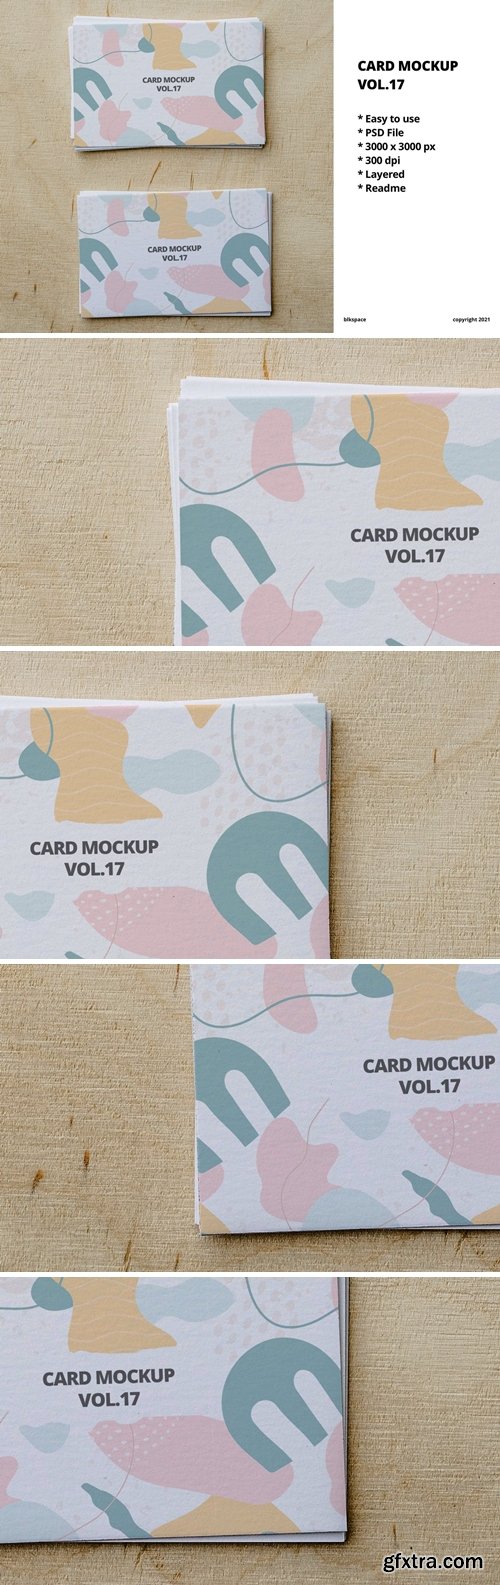 Card Mockup Vol.17